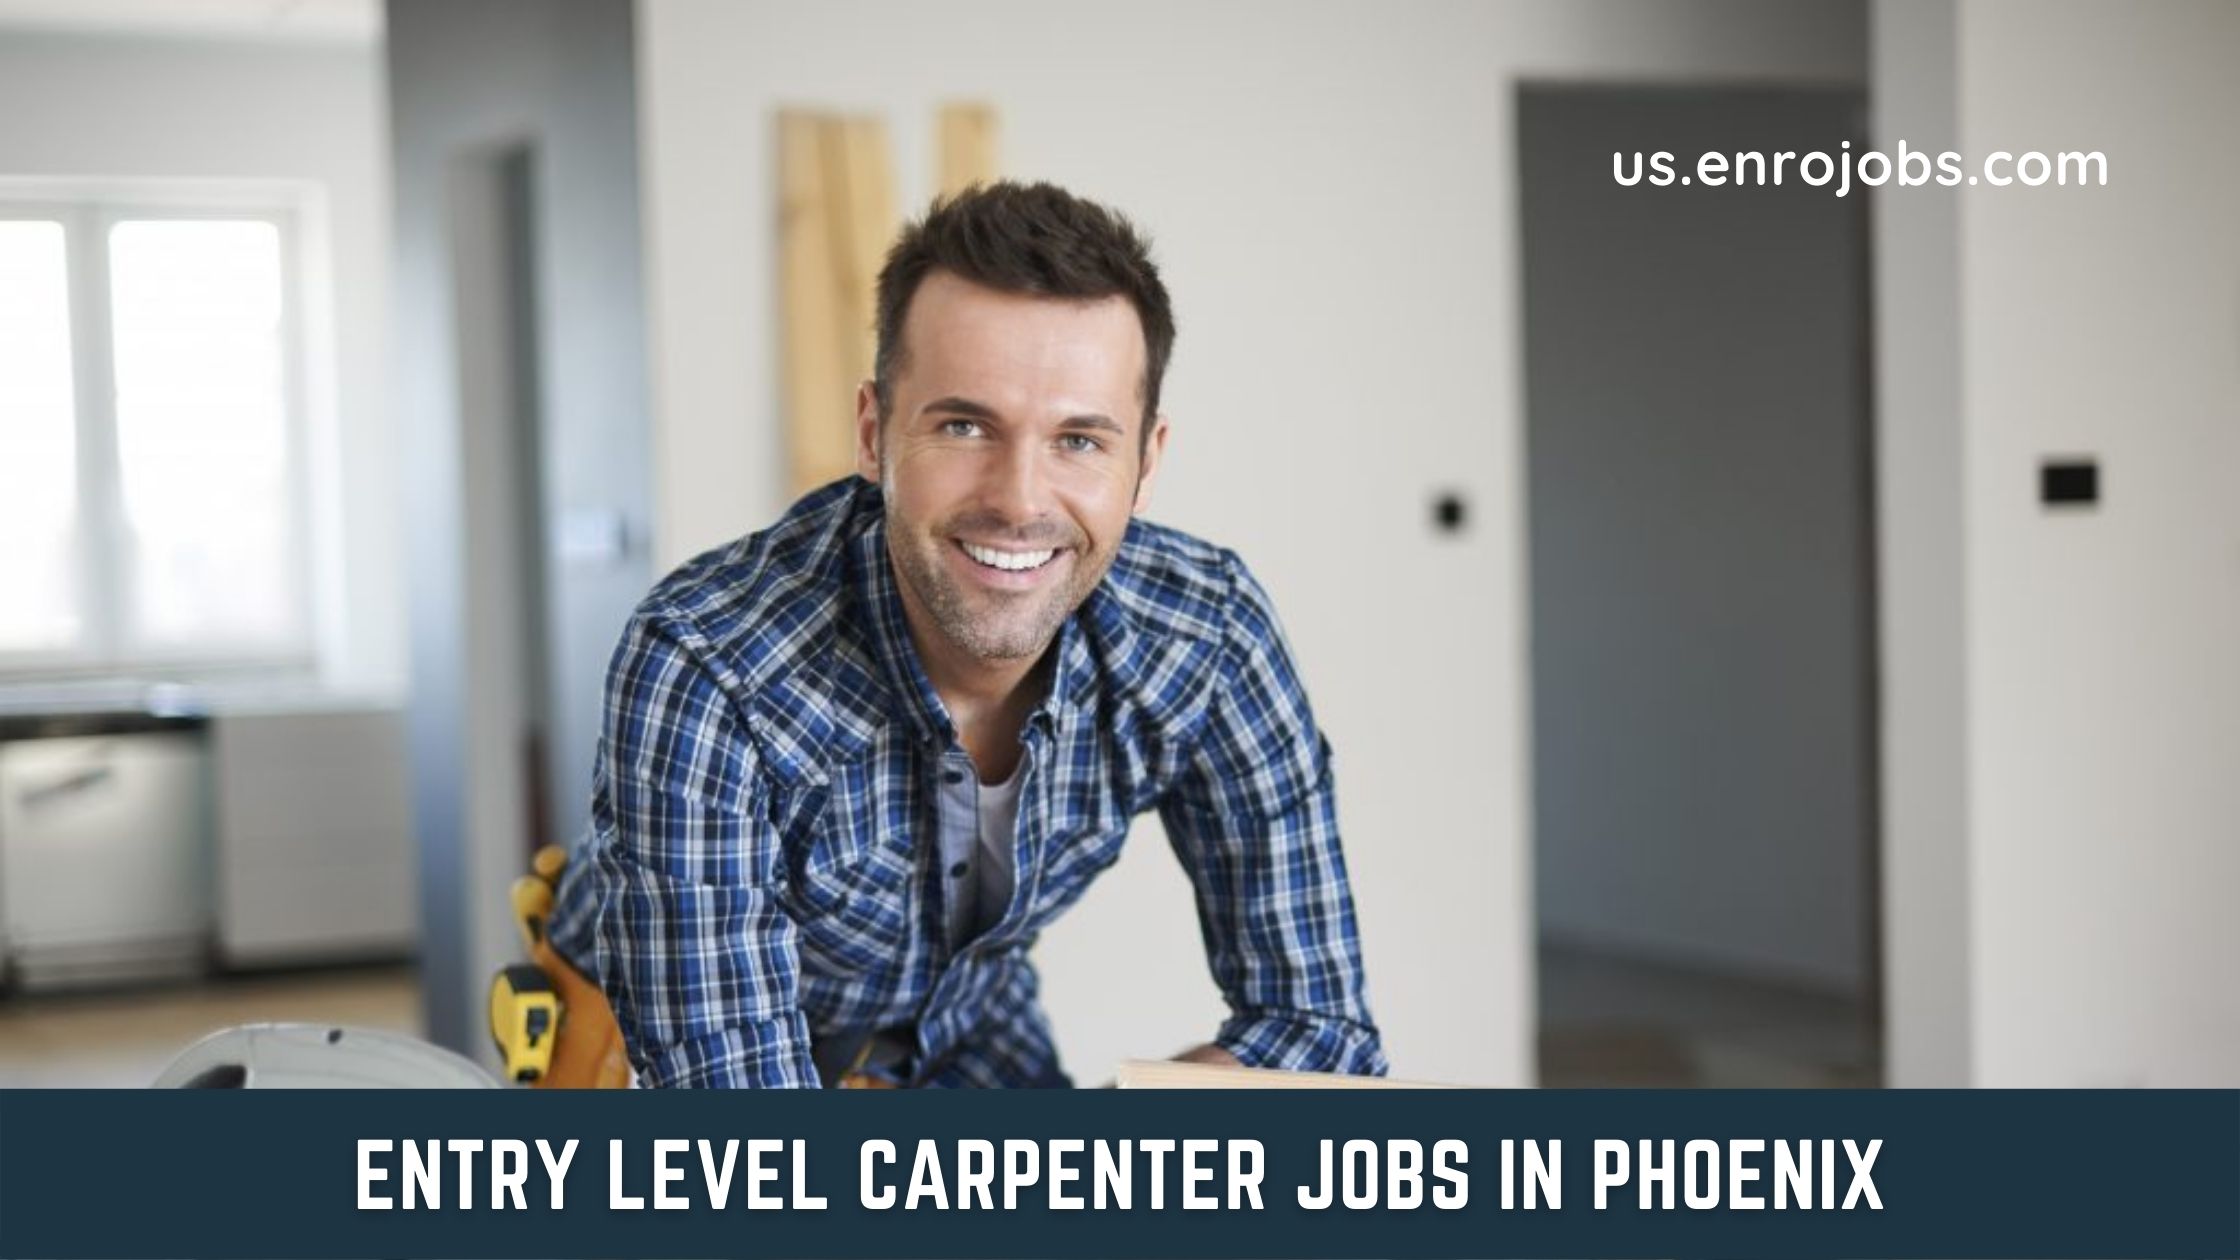 Entry Level Carpenter Jobs in Phoenix